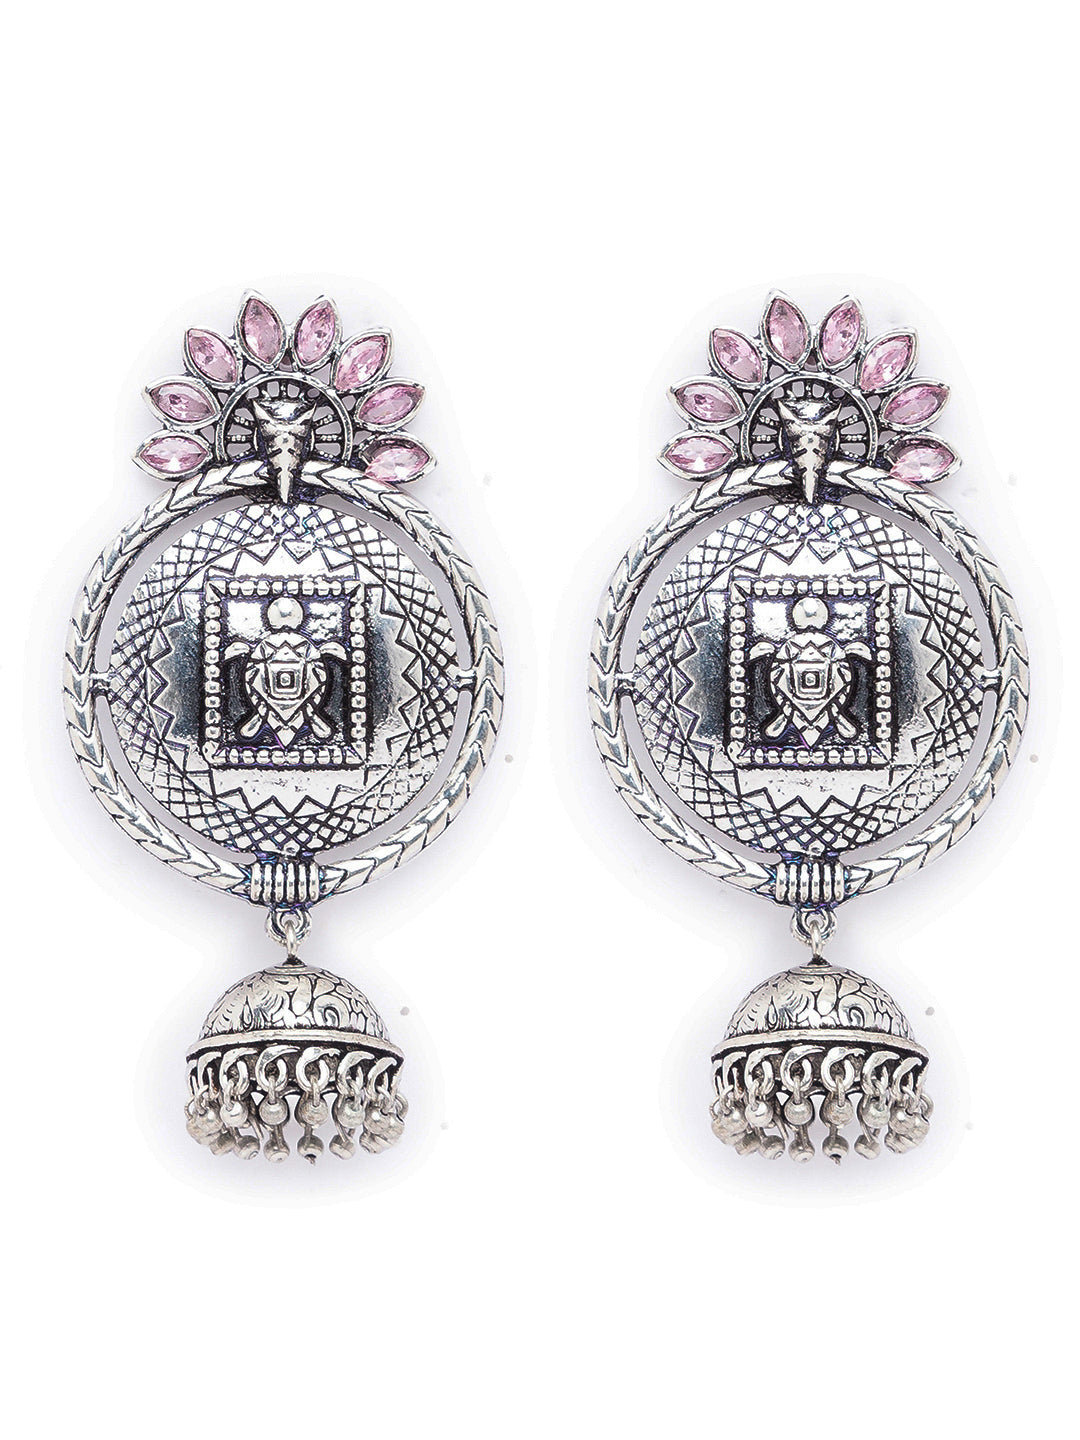 German Oxidized Silver Earrings Tortoise Engraved Design Pink Stones Studded Dangler Jhumka